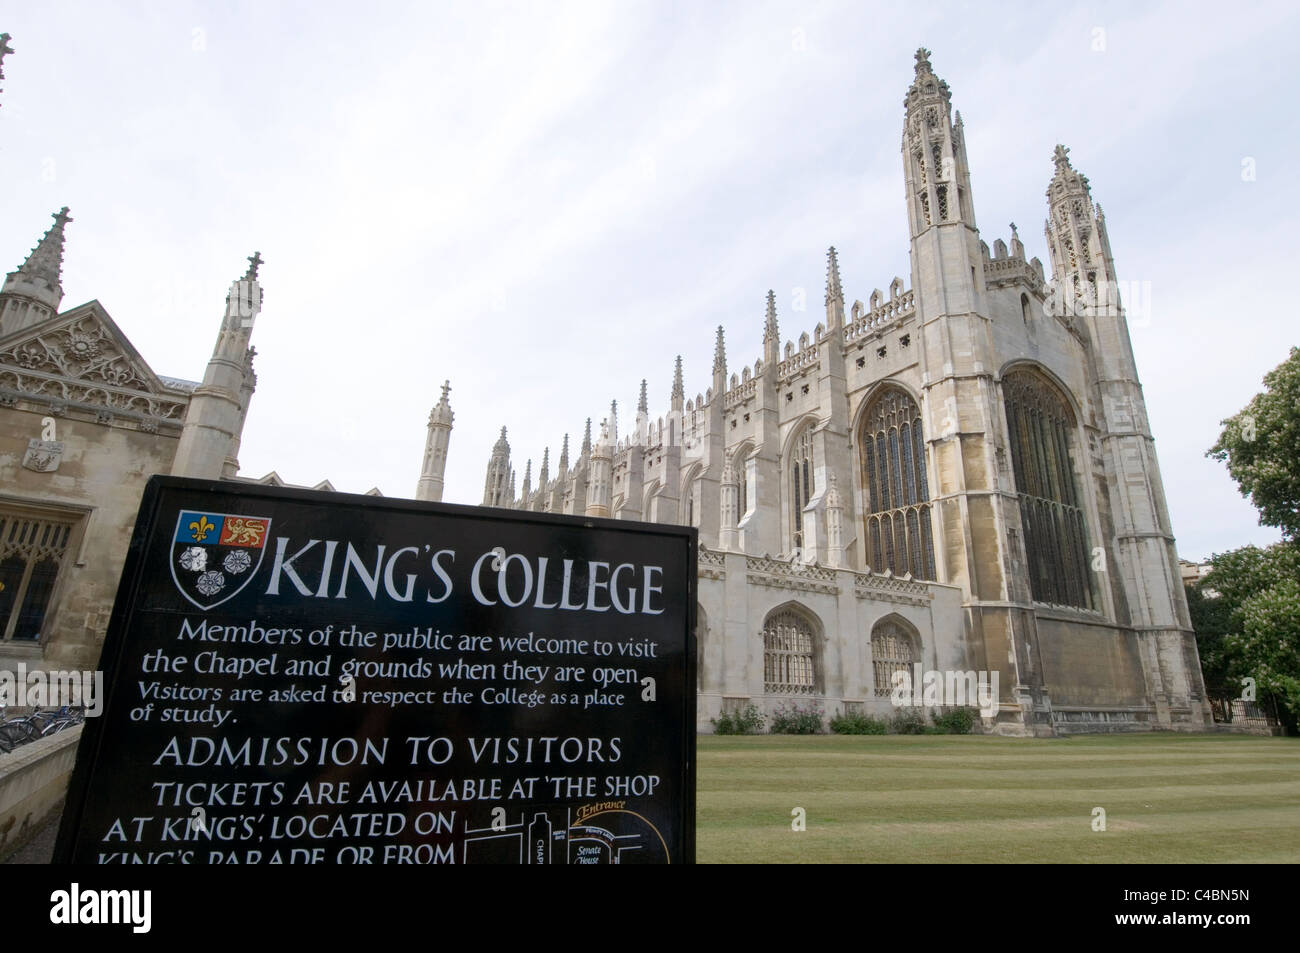 Kings College in Cambridge uk Universität historische Gebäude höhere Bildung Hochschulen Universitäten berühmte hoch Stockfoto